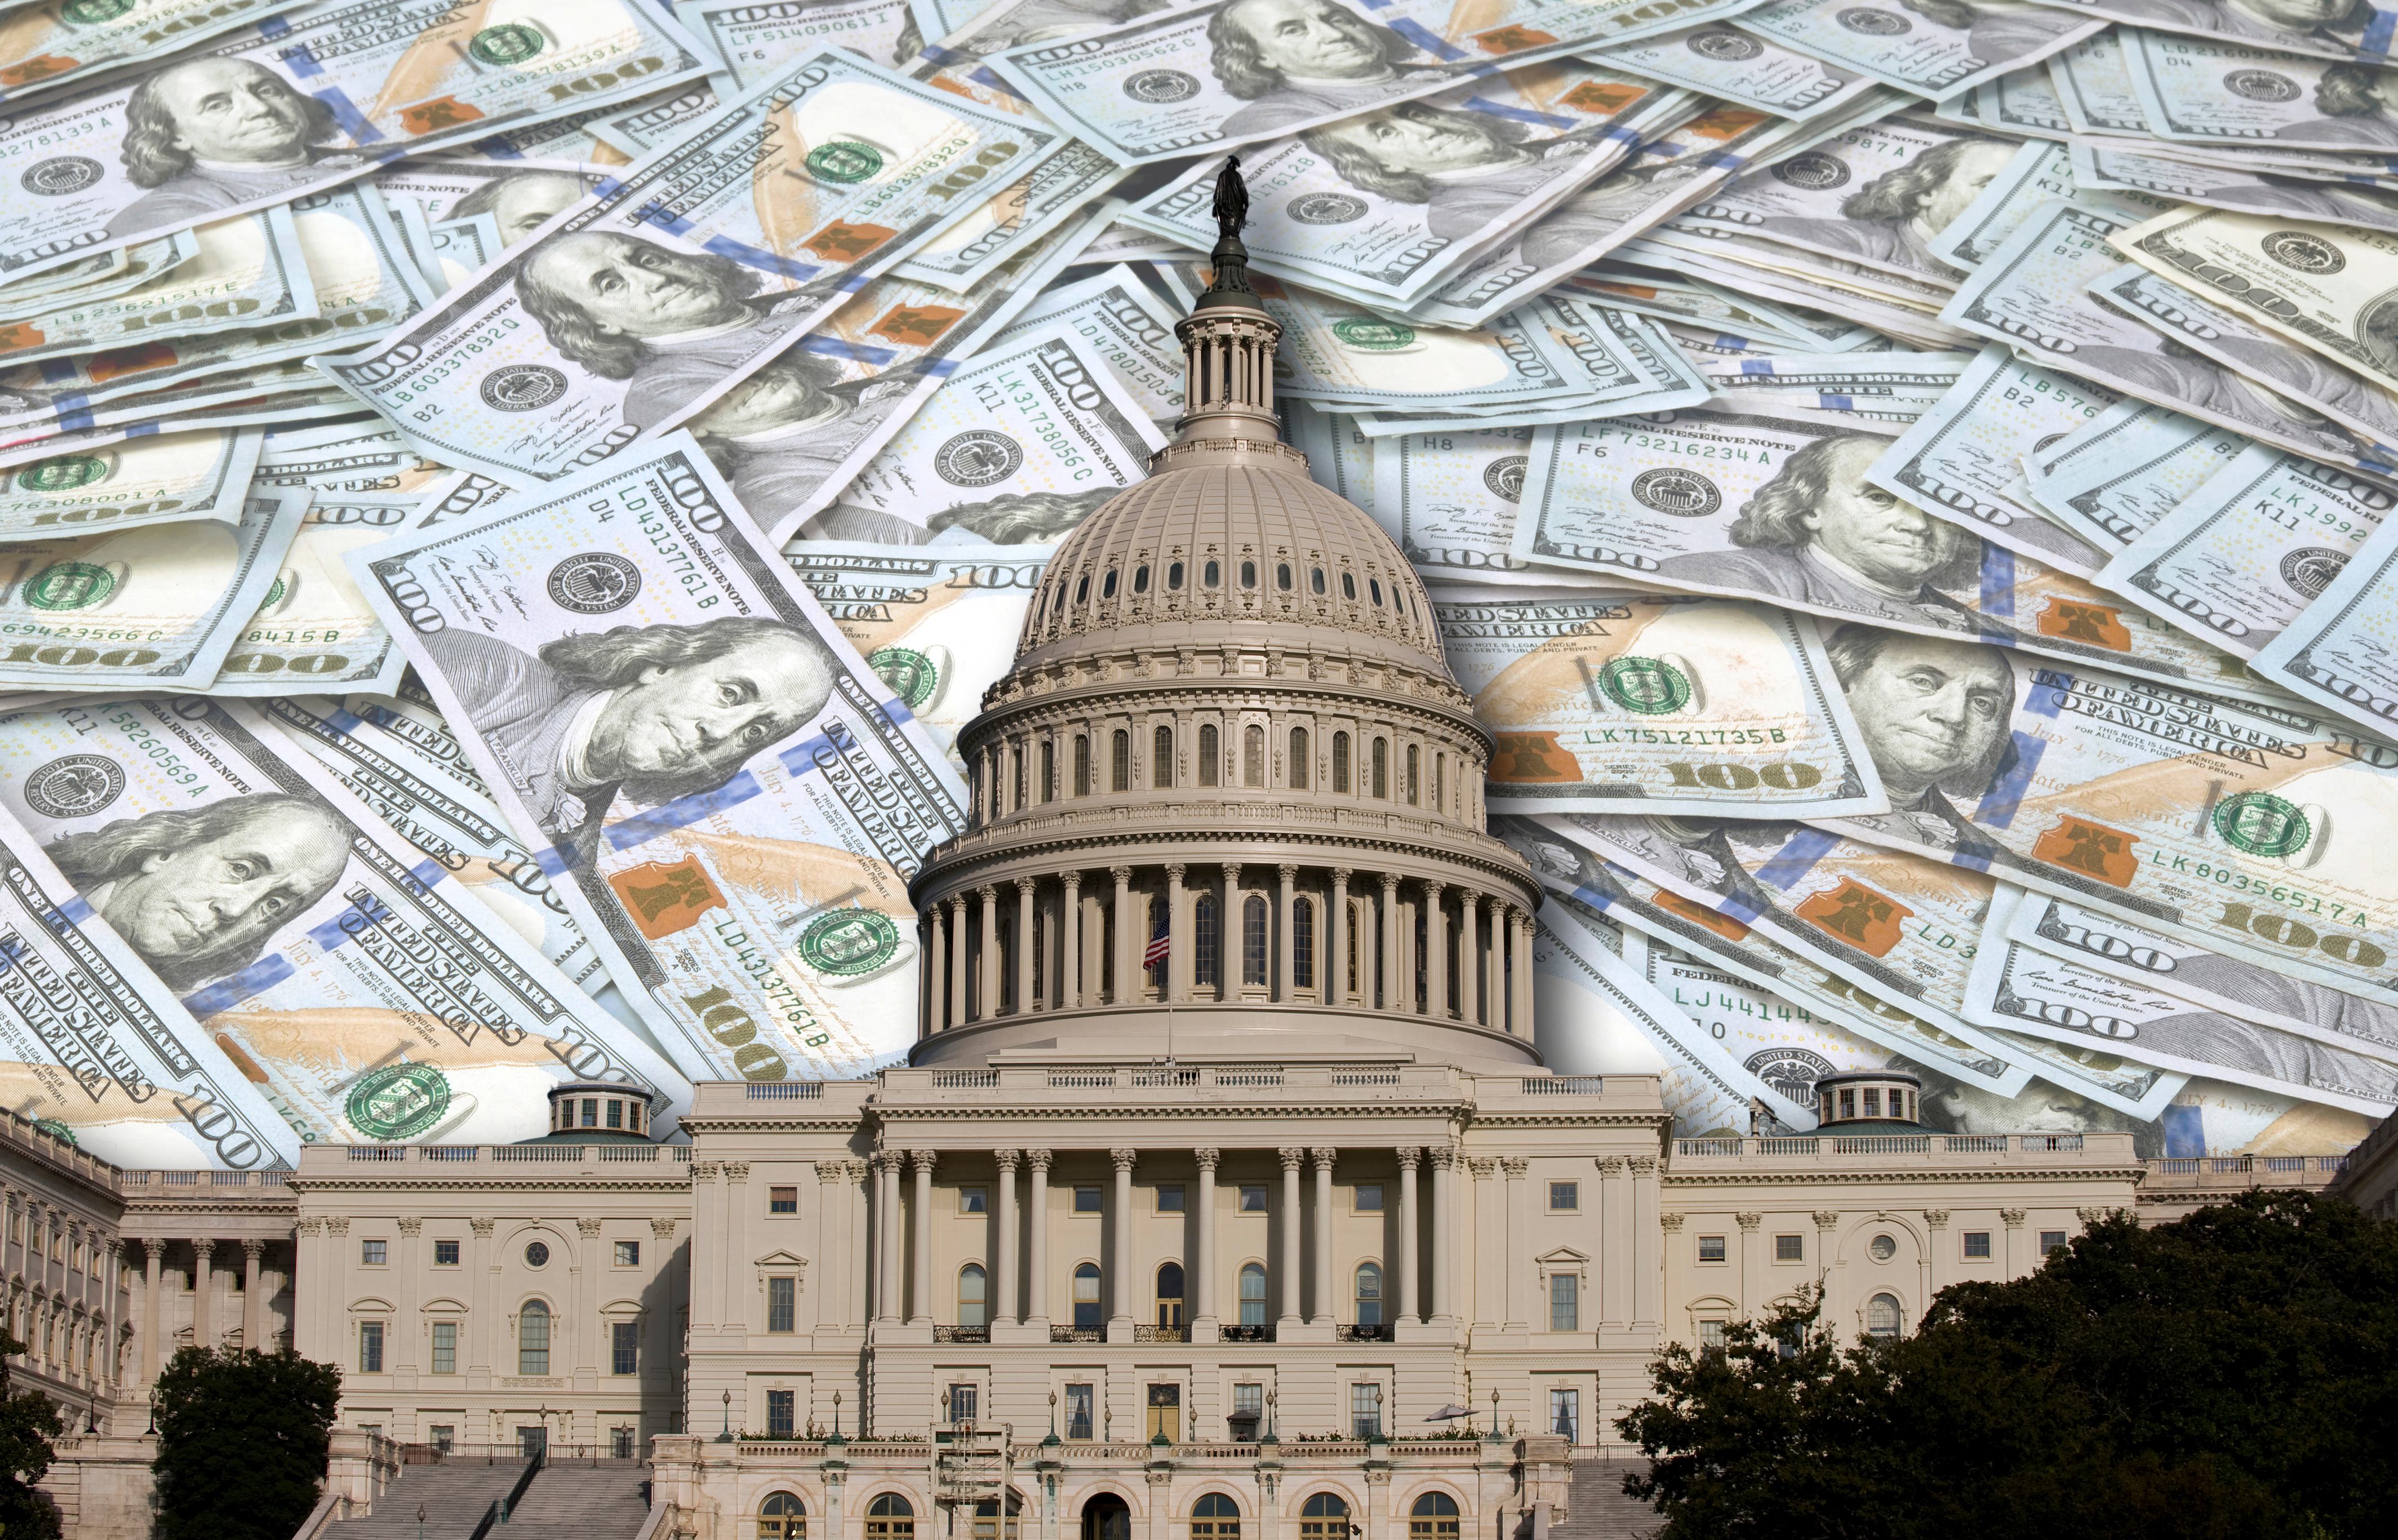 U.S. Capital money